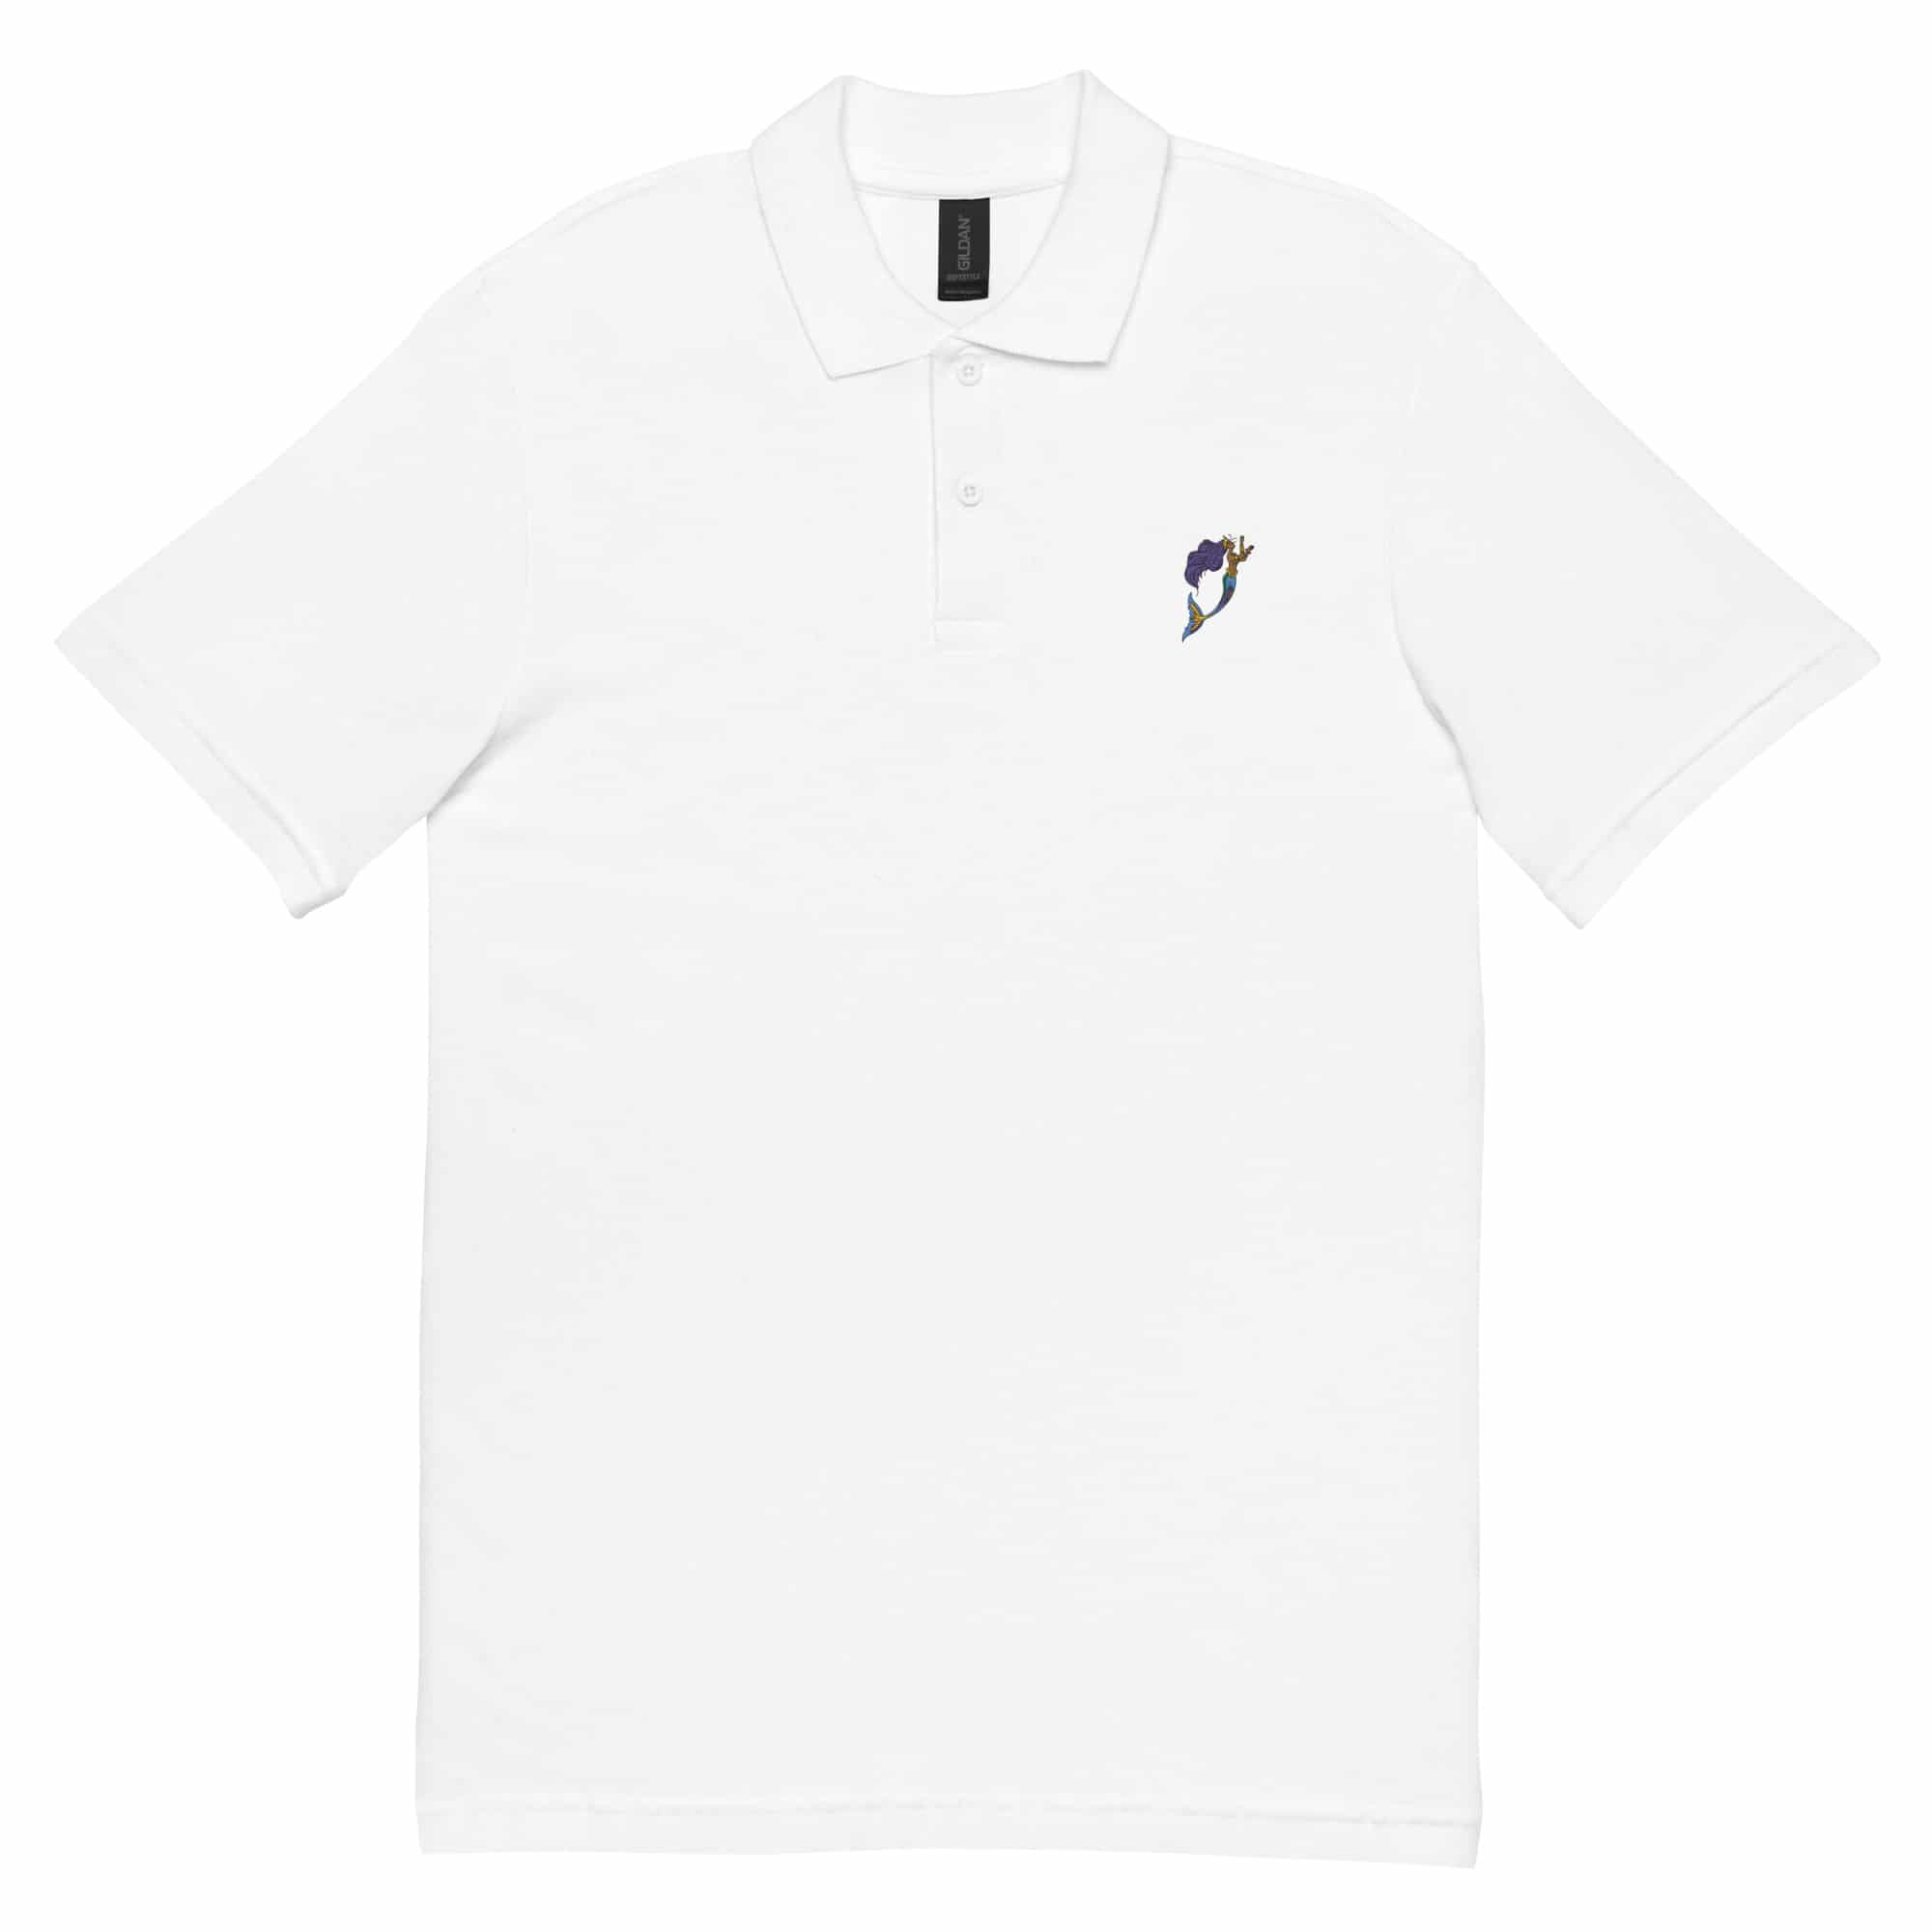 unisex pique polo shirt white front 6478b02772cb9